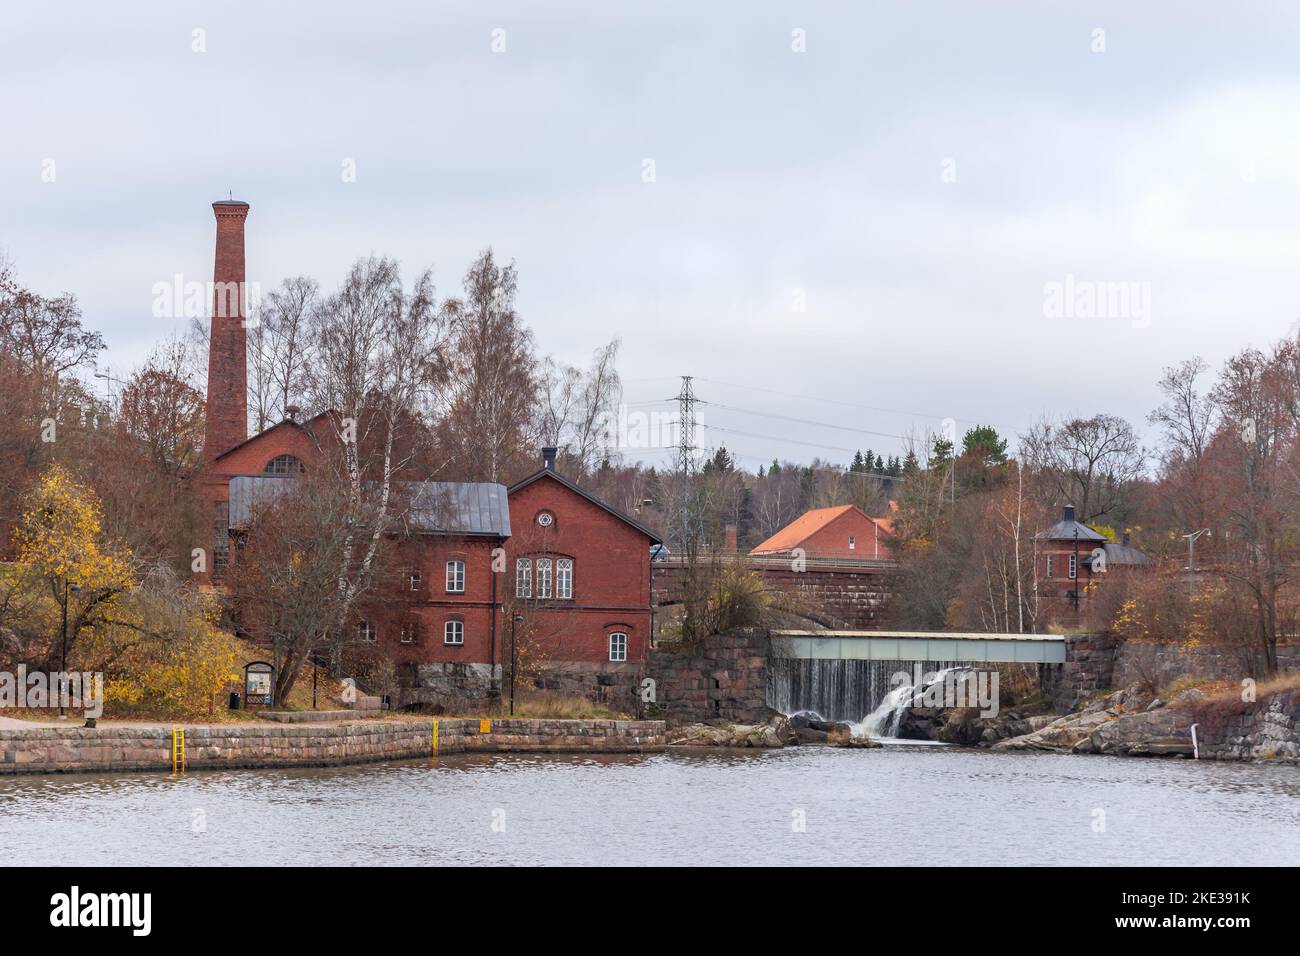 Vanhakaupunki hydropower plant by Vantaanjoki river in Helsinki old town in Finland Stock Photo